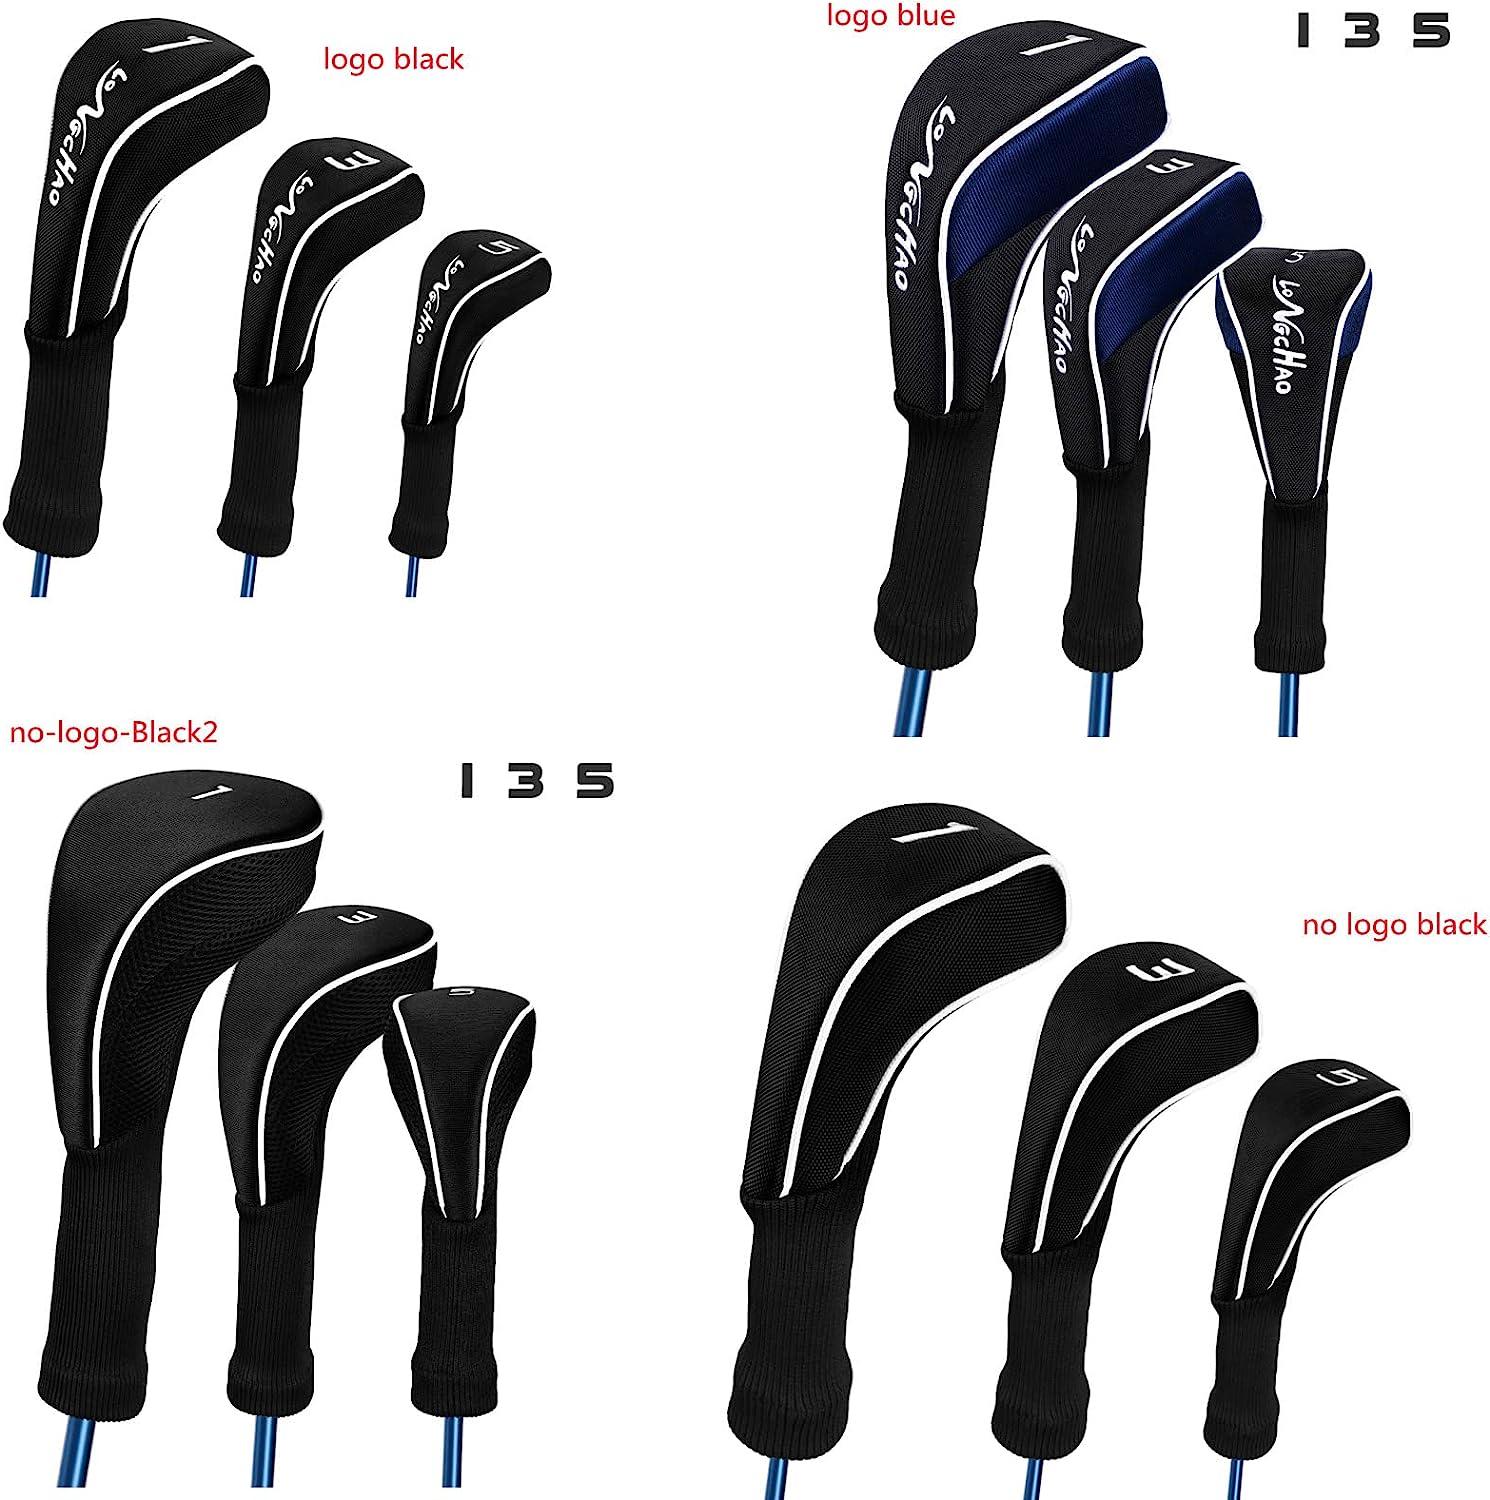 3Pcs Long Neck Mesh Golf Club Head Covers Set, Long Knit